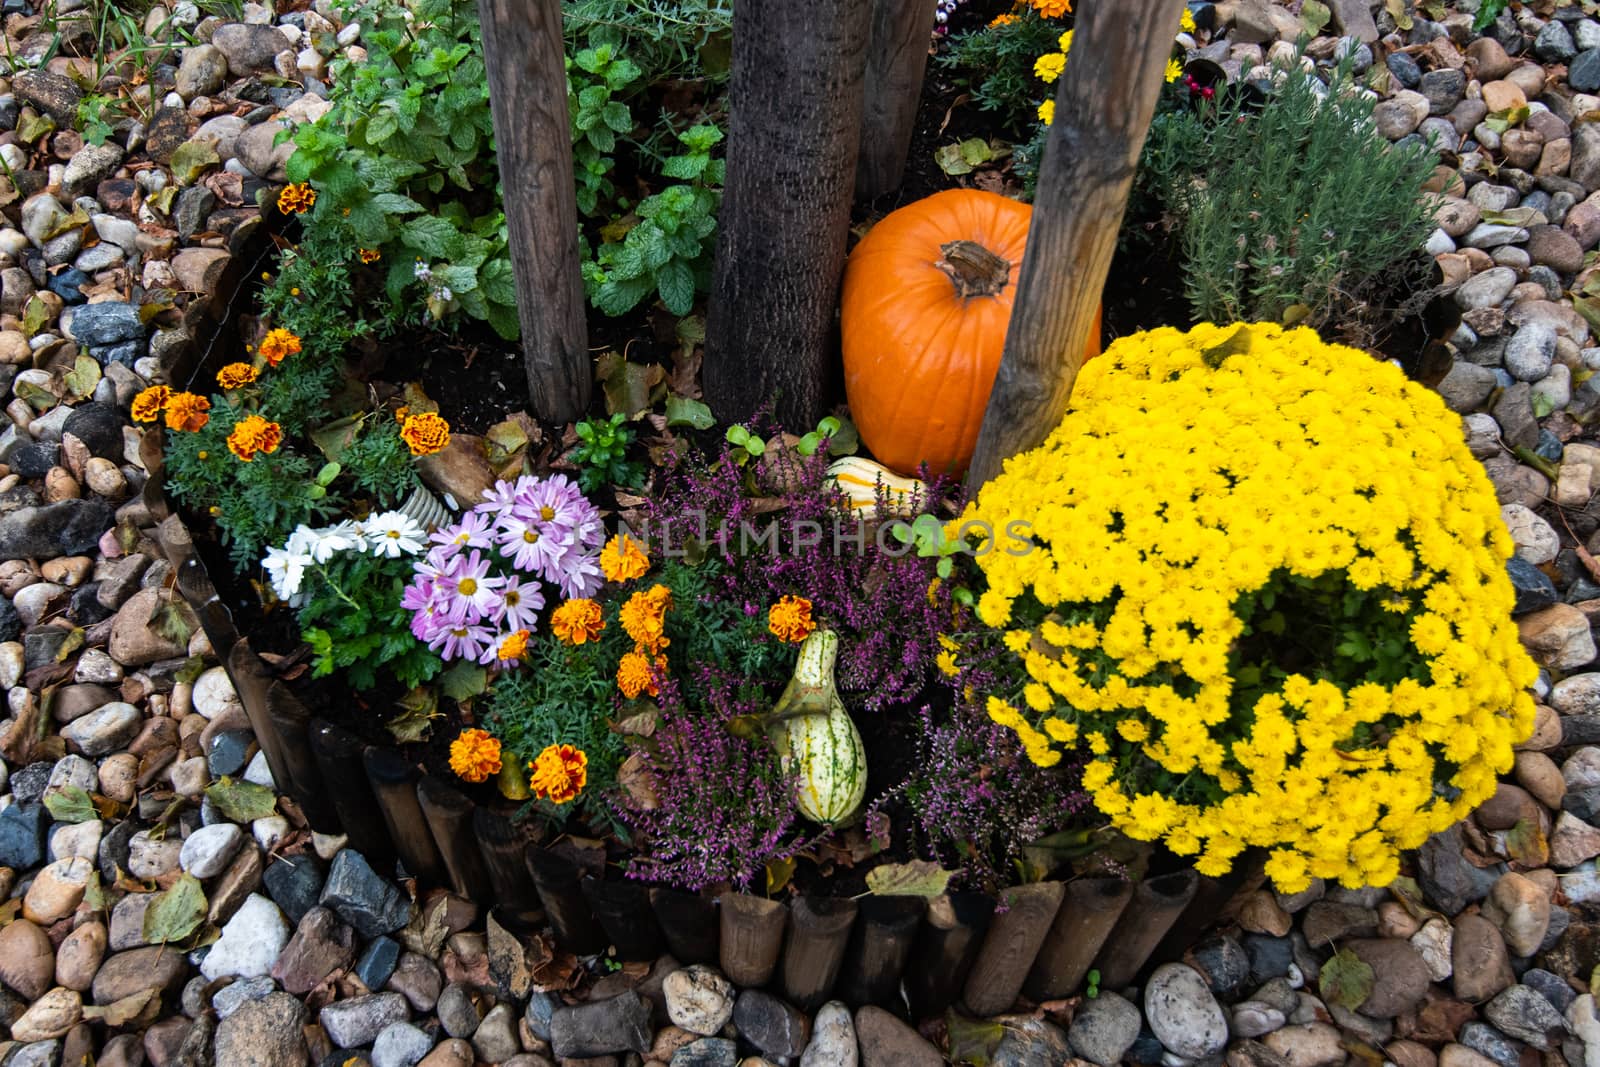 Flower and vegetables arrangements for halloween.